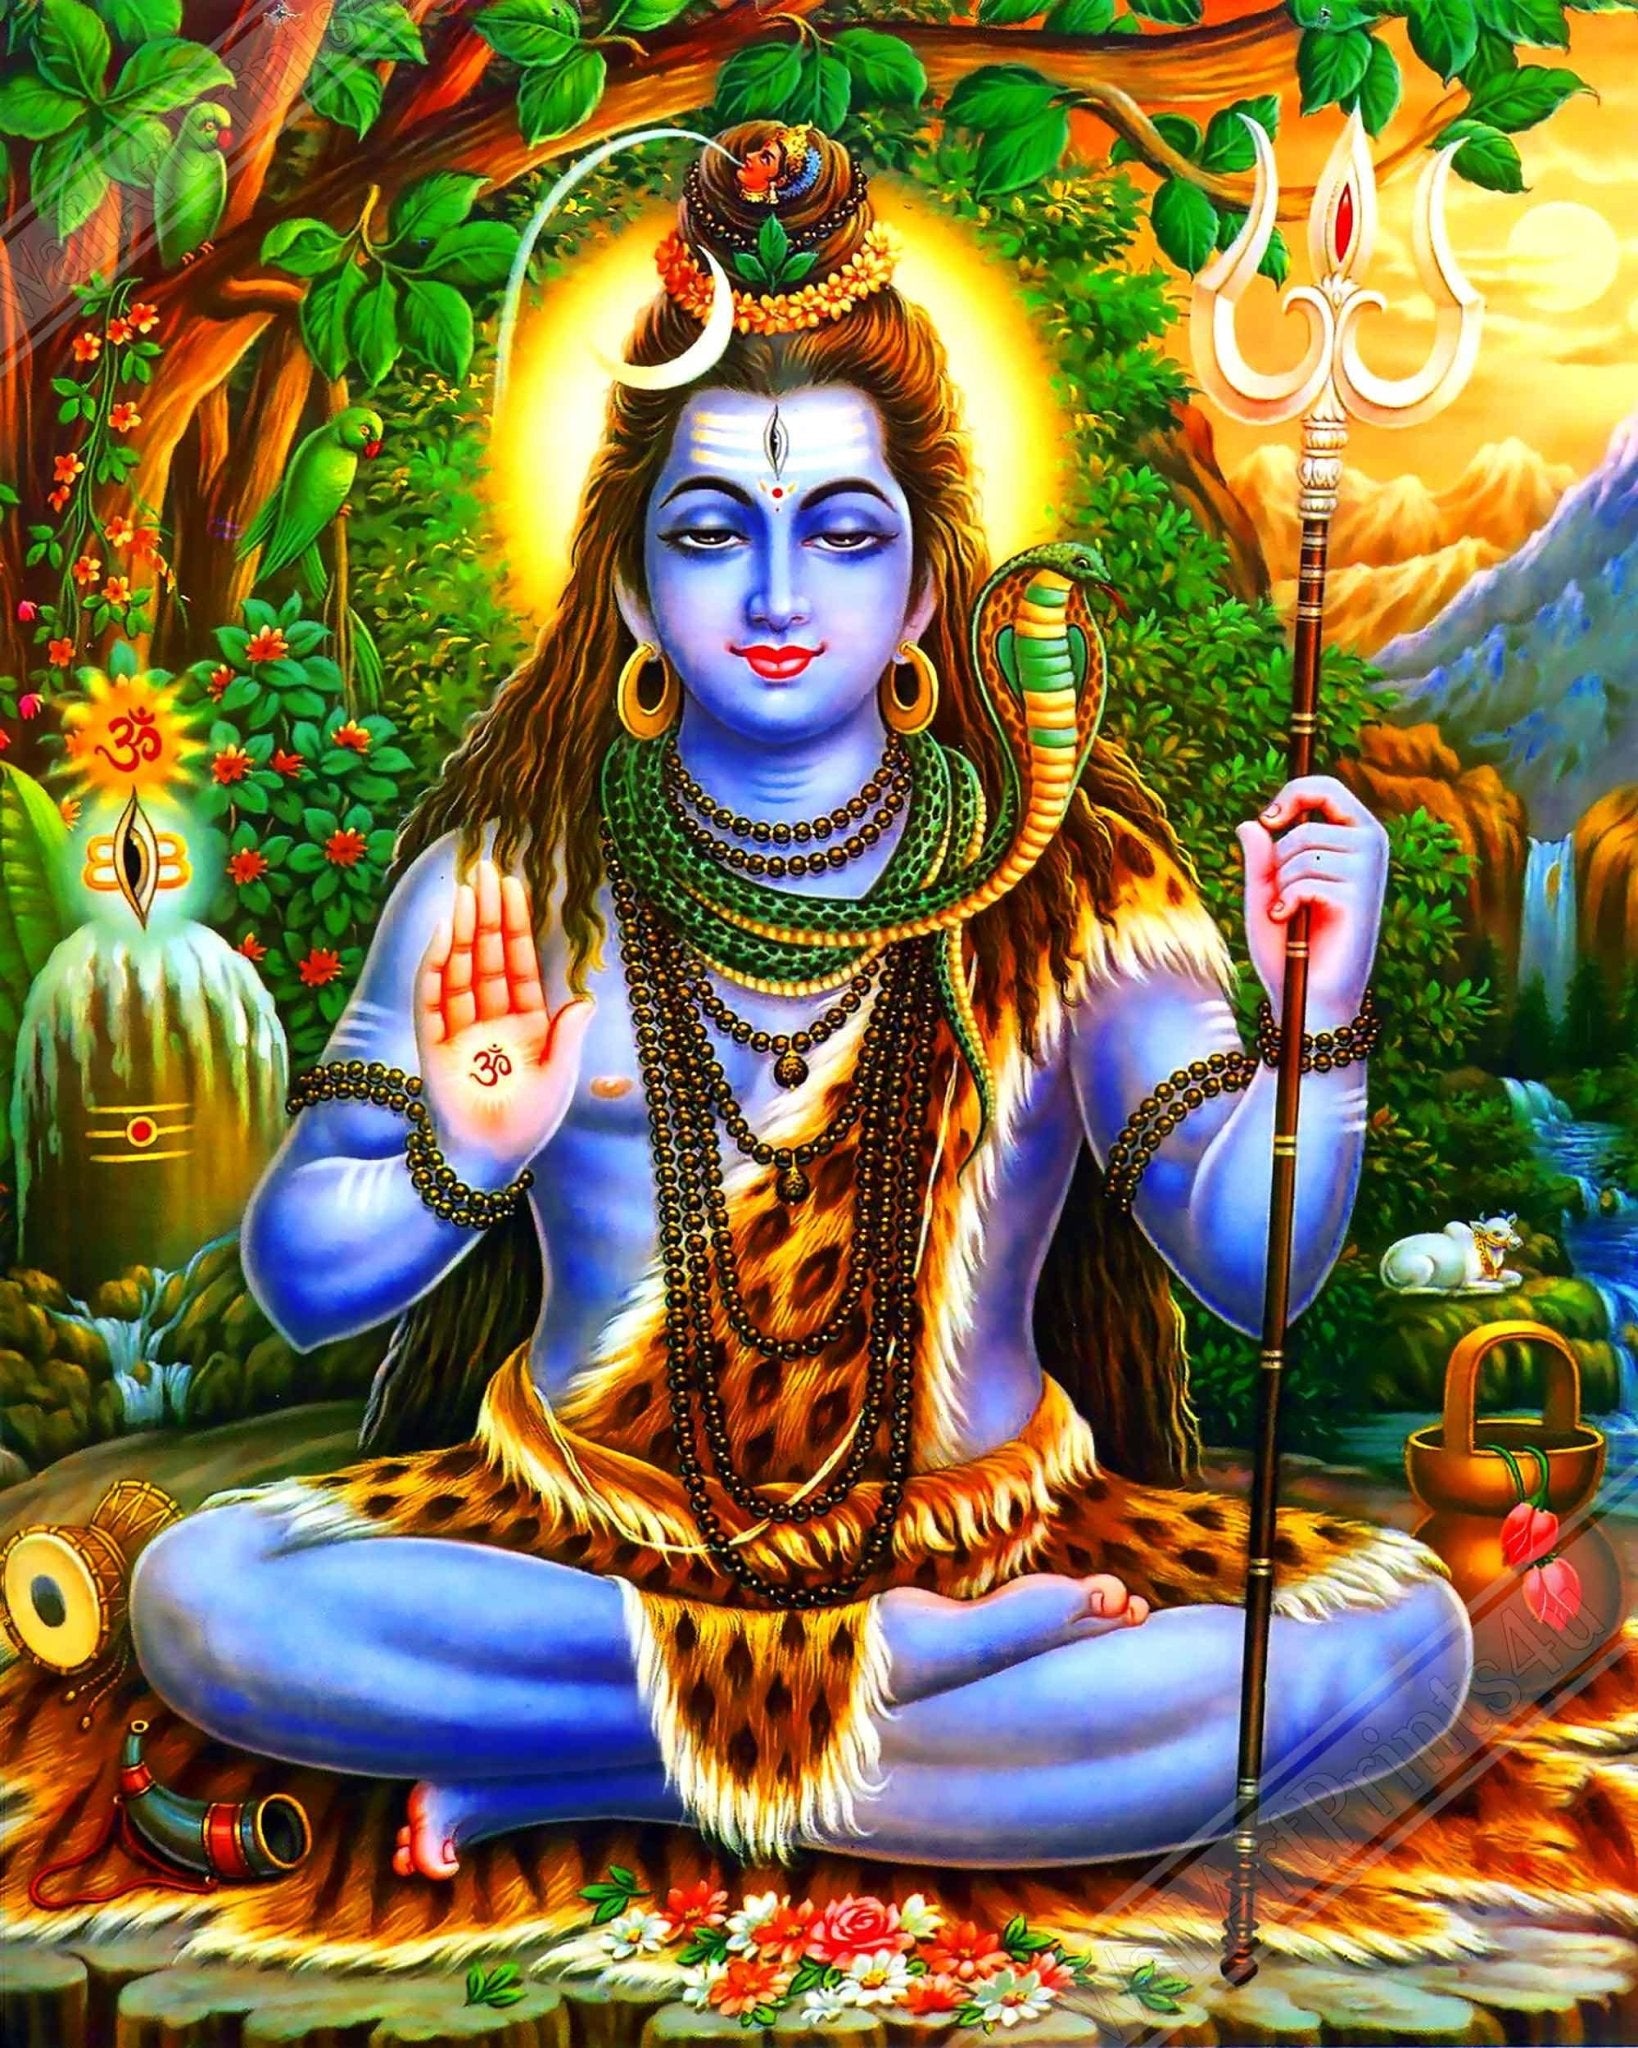 Shiva Canvas Print, Hindu God Divine Energy, Dance, Destruction - Shiva Print - Supreme Being For Shiva Meditation - WallArtPrints4U